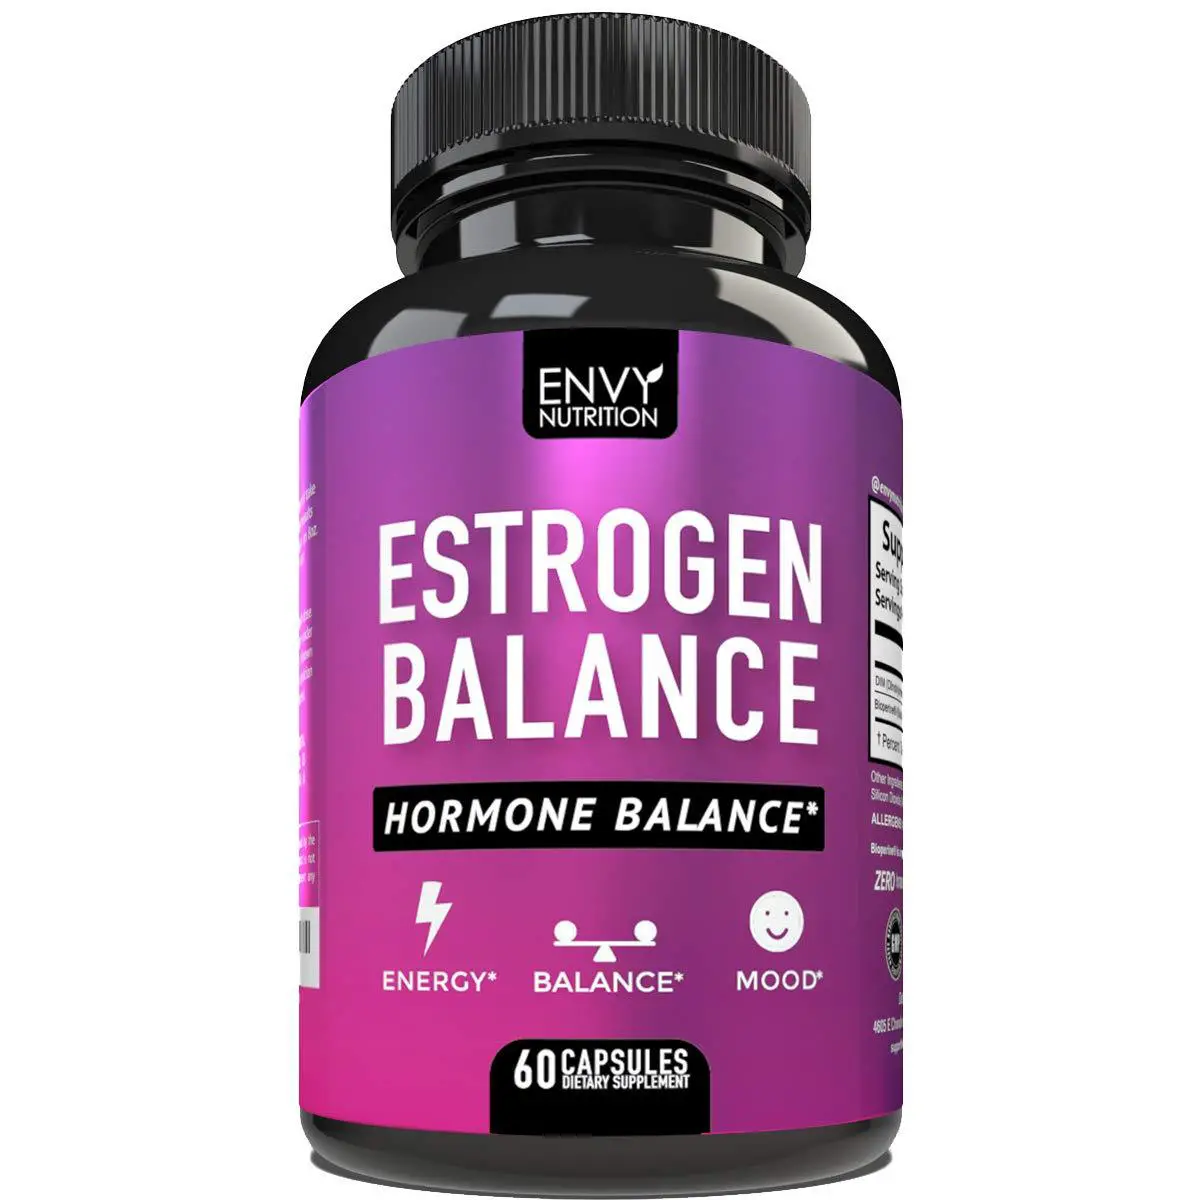 Envy Nutrition Estrogen Balance